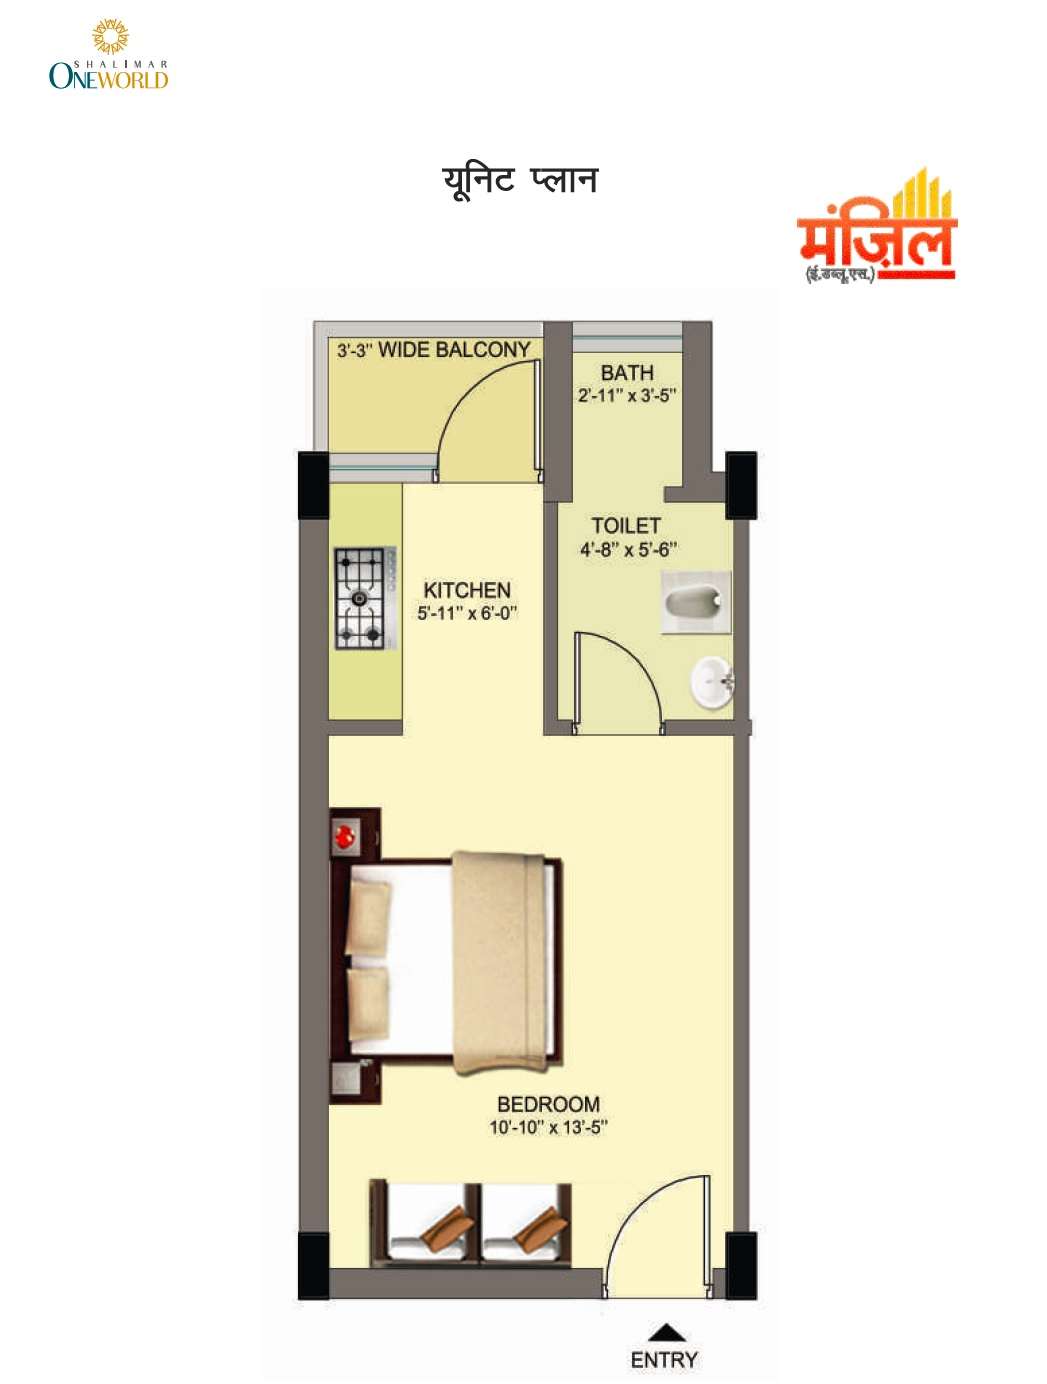 1 BHK 226 Sq. Ft. Apartment in Shalimar One World Manjil And Ashiyana